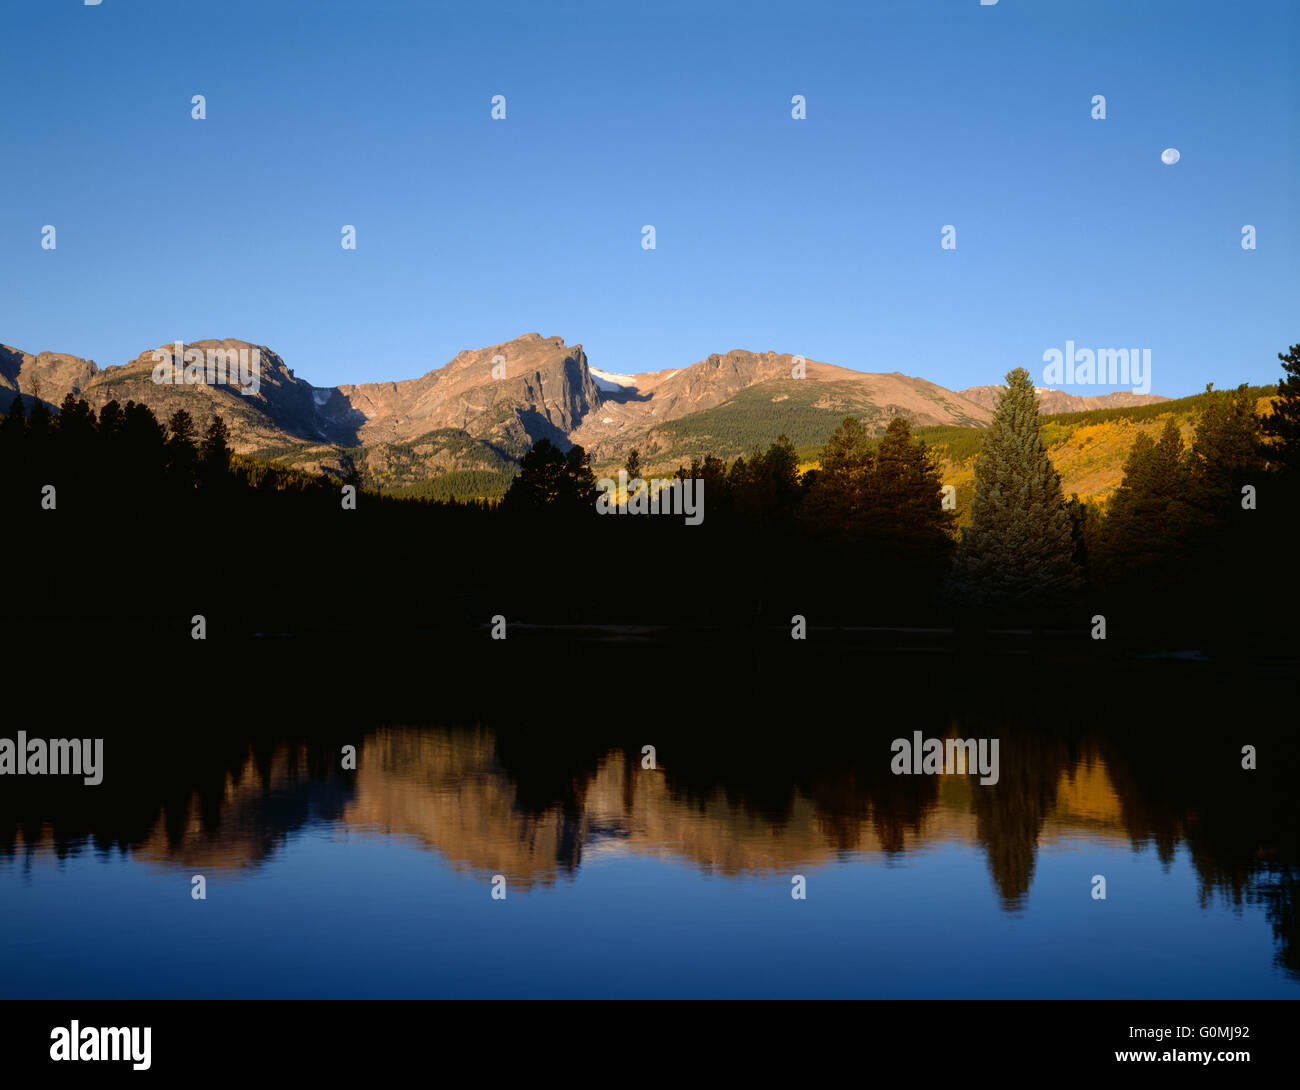 USA, Colorado, Rocky Mountain National Park, Hallett Peak reflects in Sprague Lake at sunrise. Stock Photo